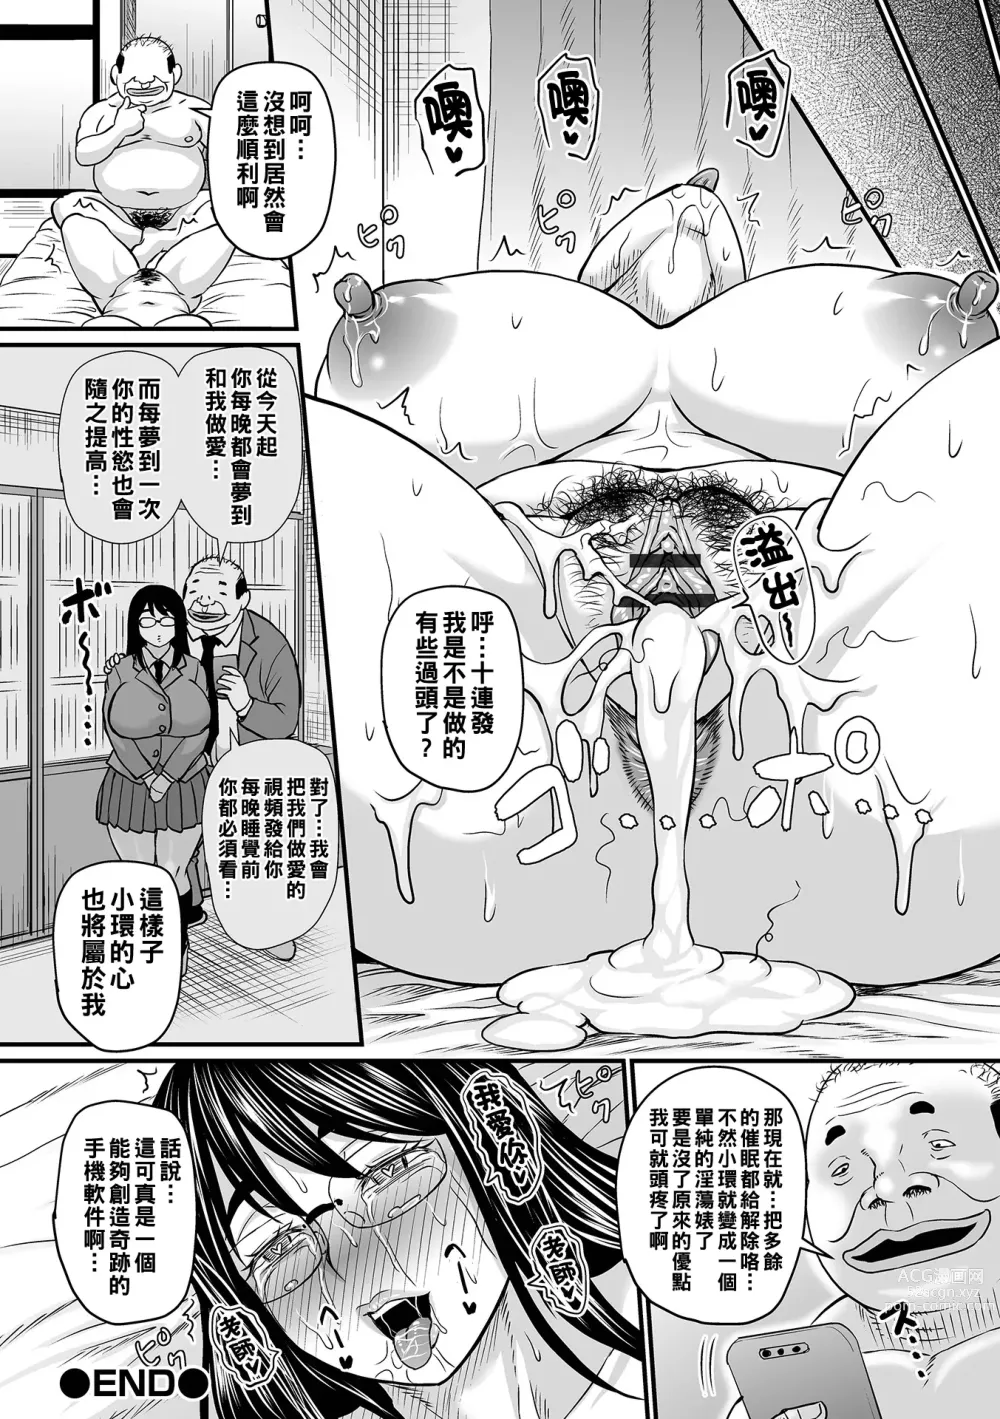 Page 39 of manga Yokubou Kanaeru Kiseki no......